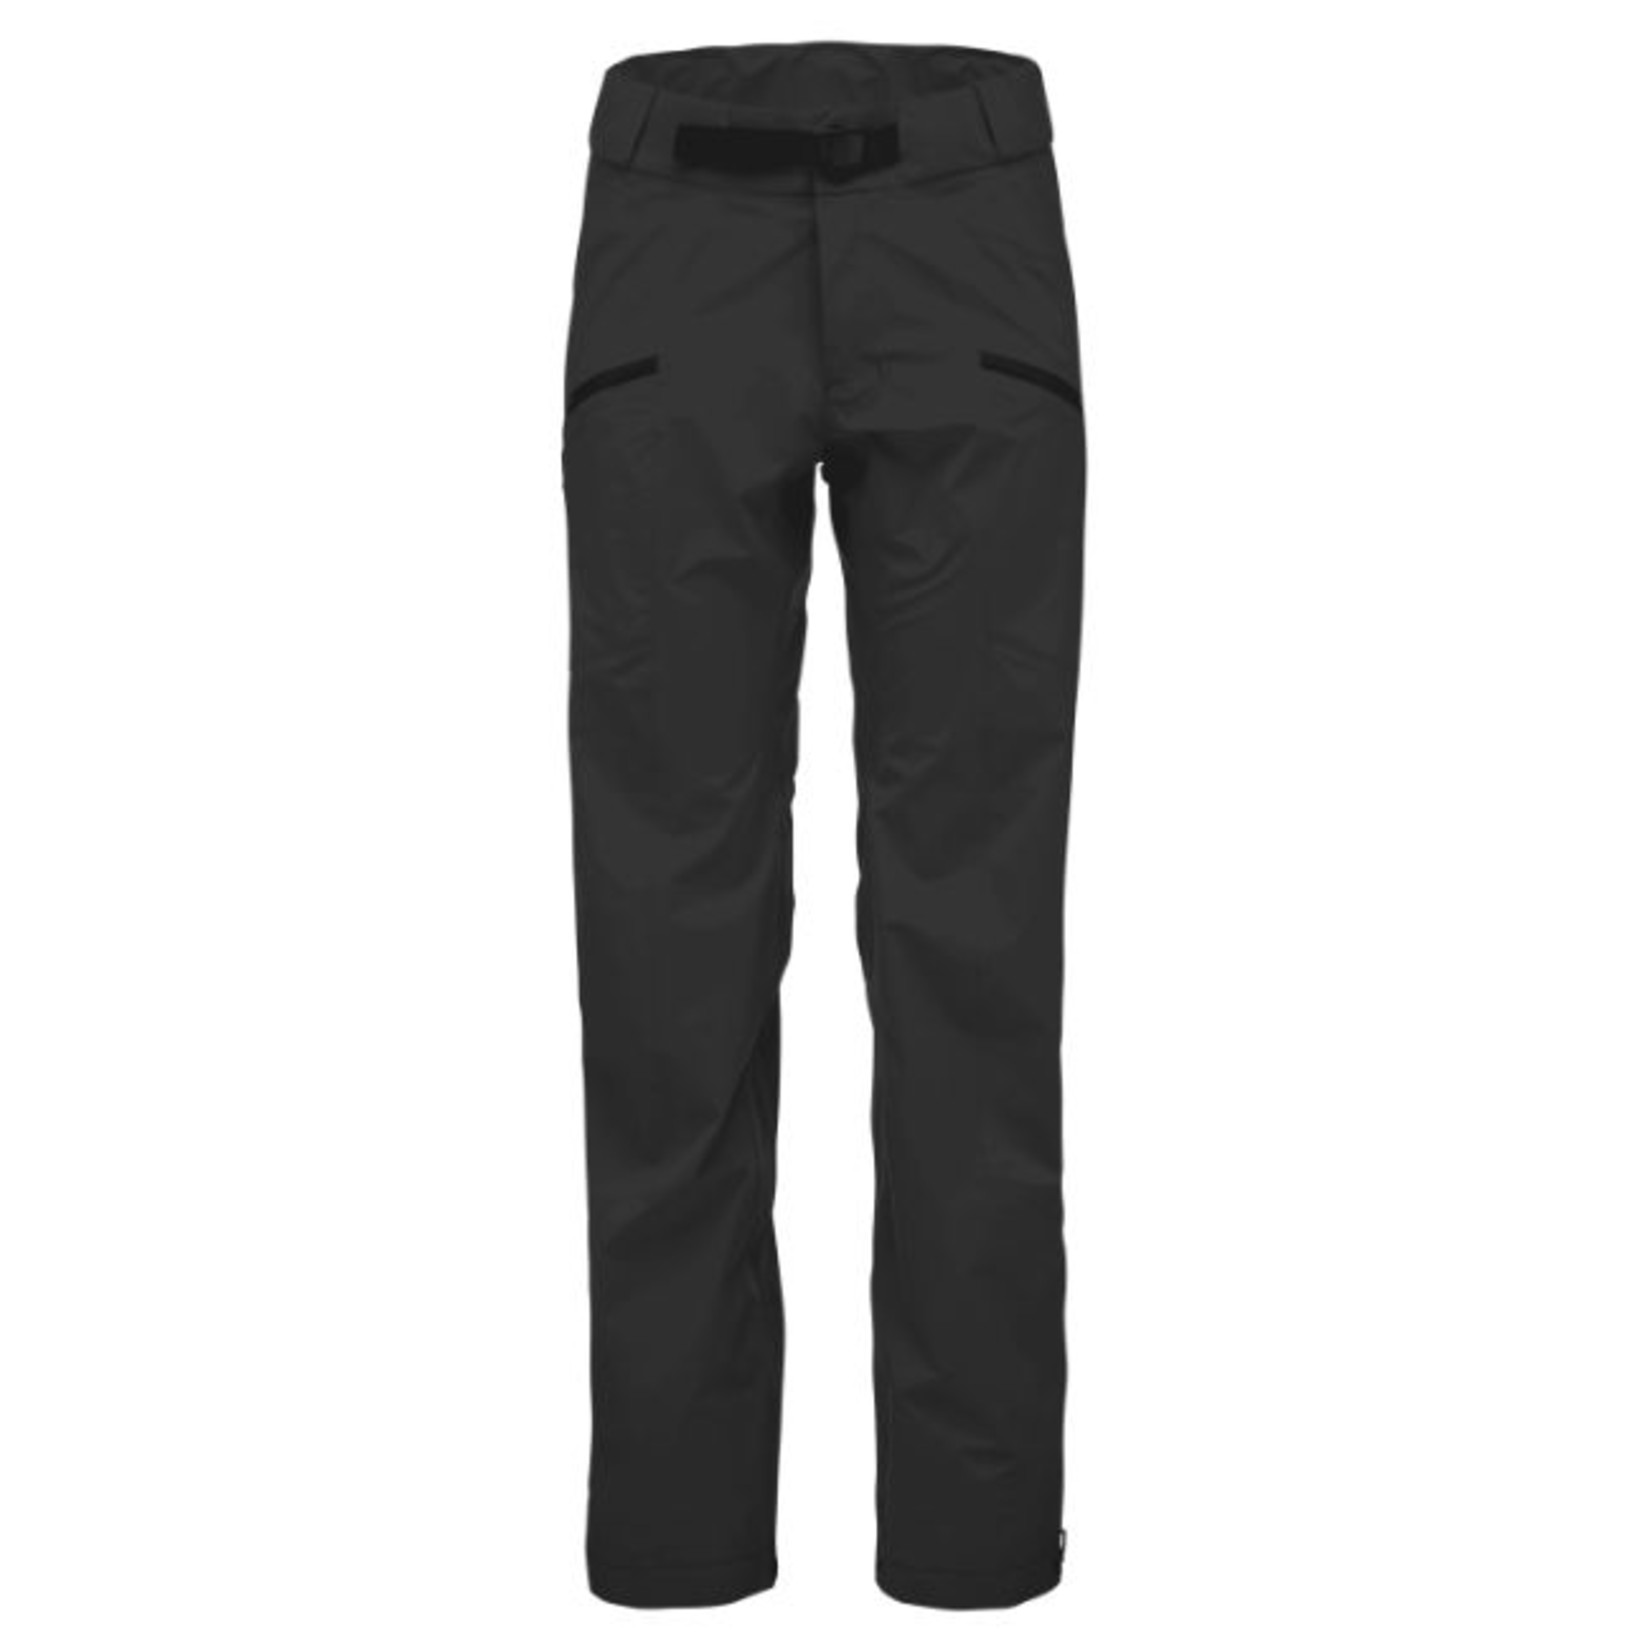 Black Diamond Women's Helio GTX Active Pants. Last pair - Size: XL